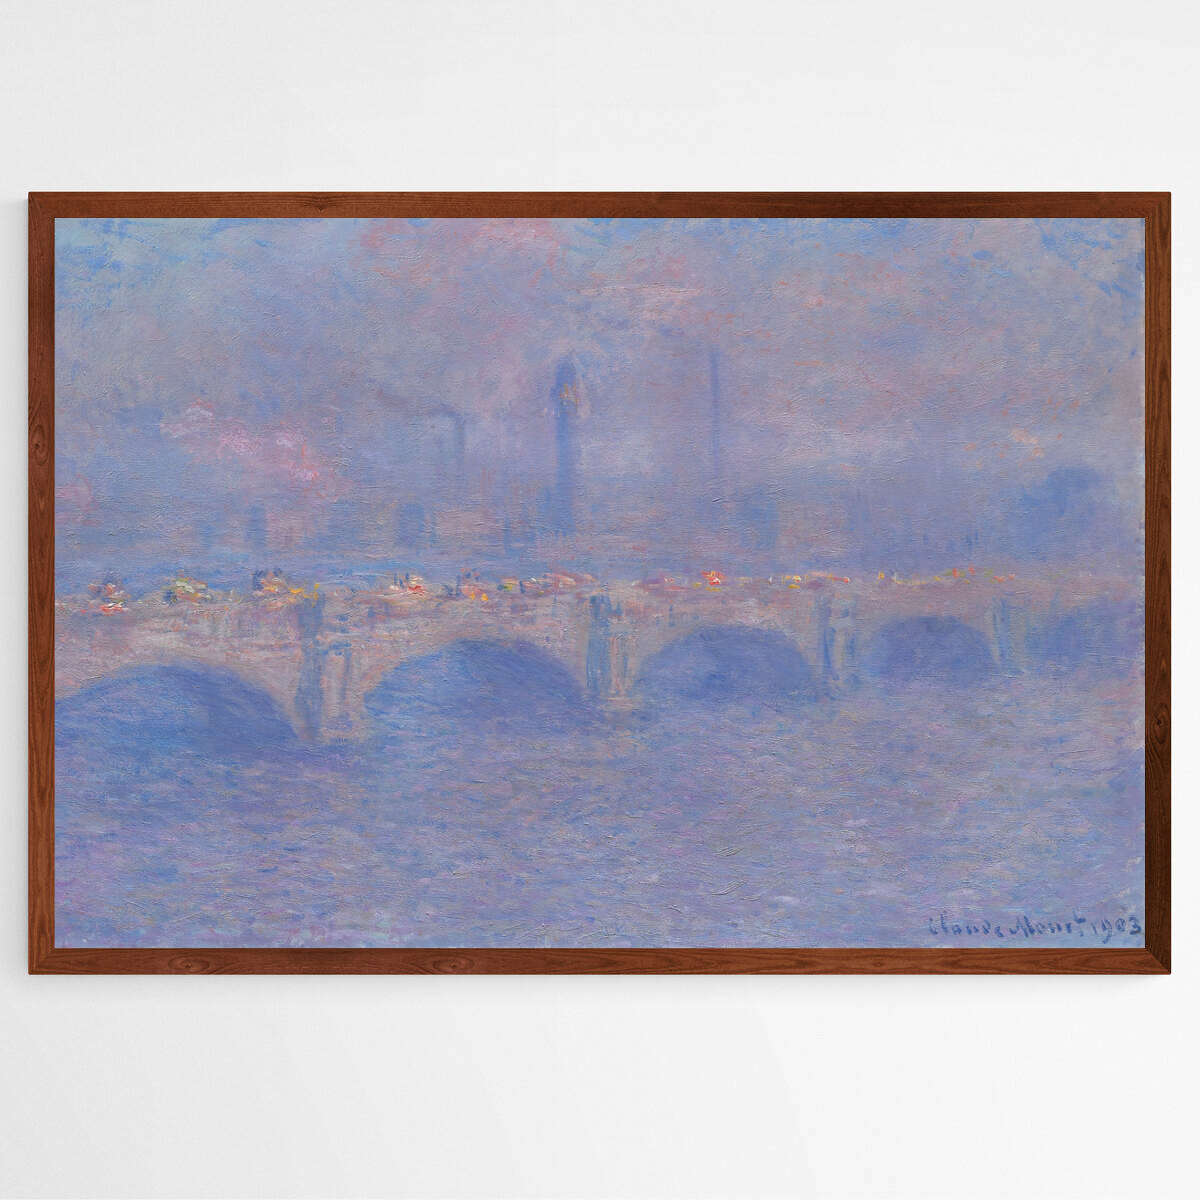 Waterloo Bridge Sunlight Effect | Claude Monet Wall Art Prints - The Canvas Hive